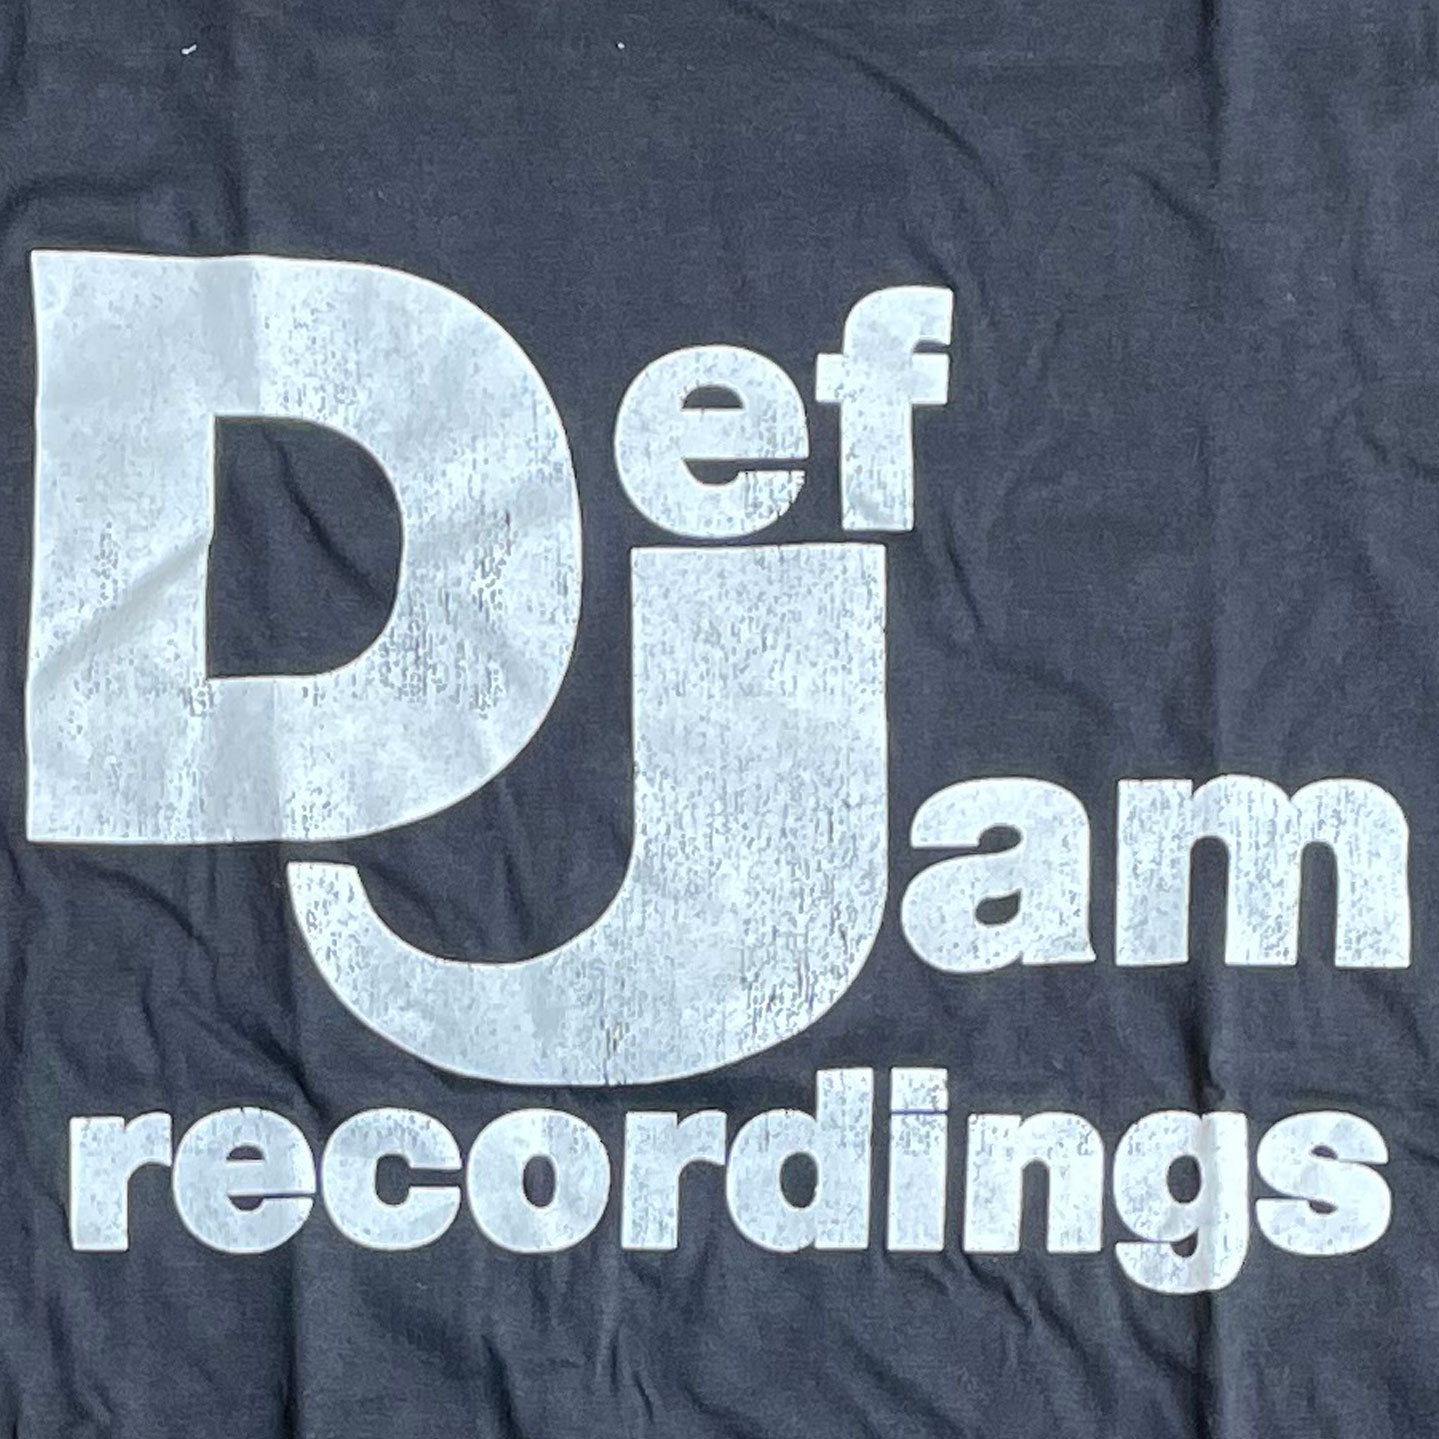 DEF JAM Recordings Tシャツ オフィシャル